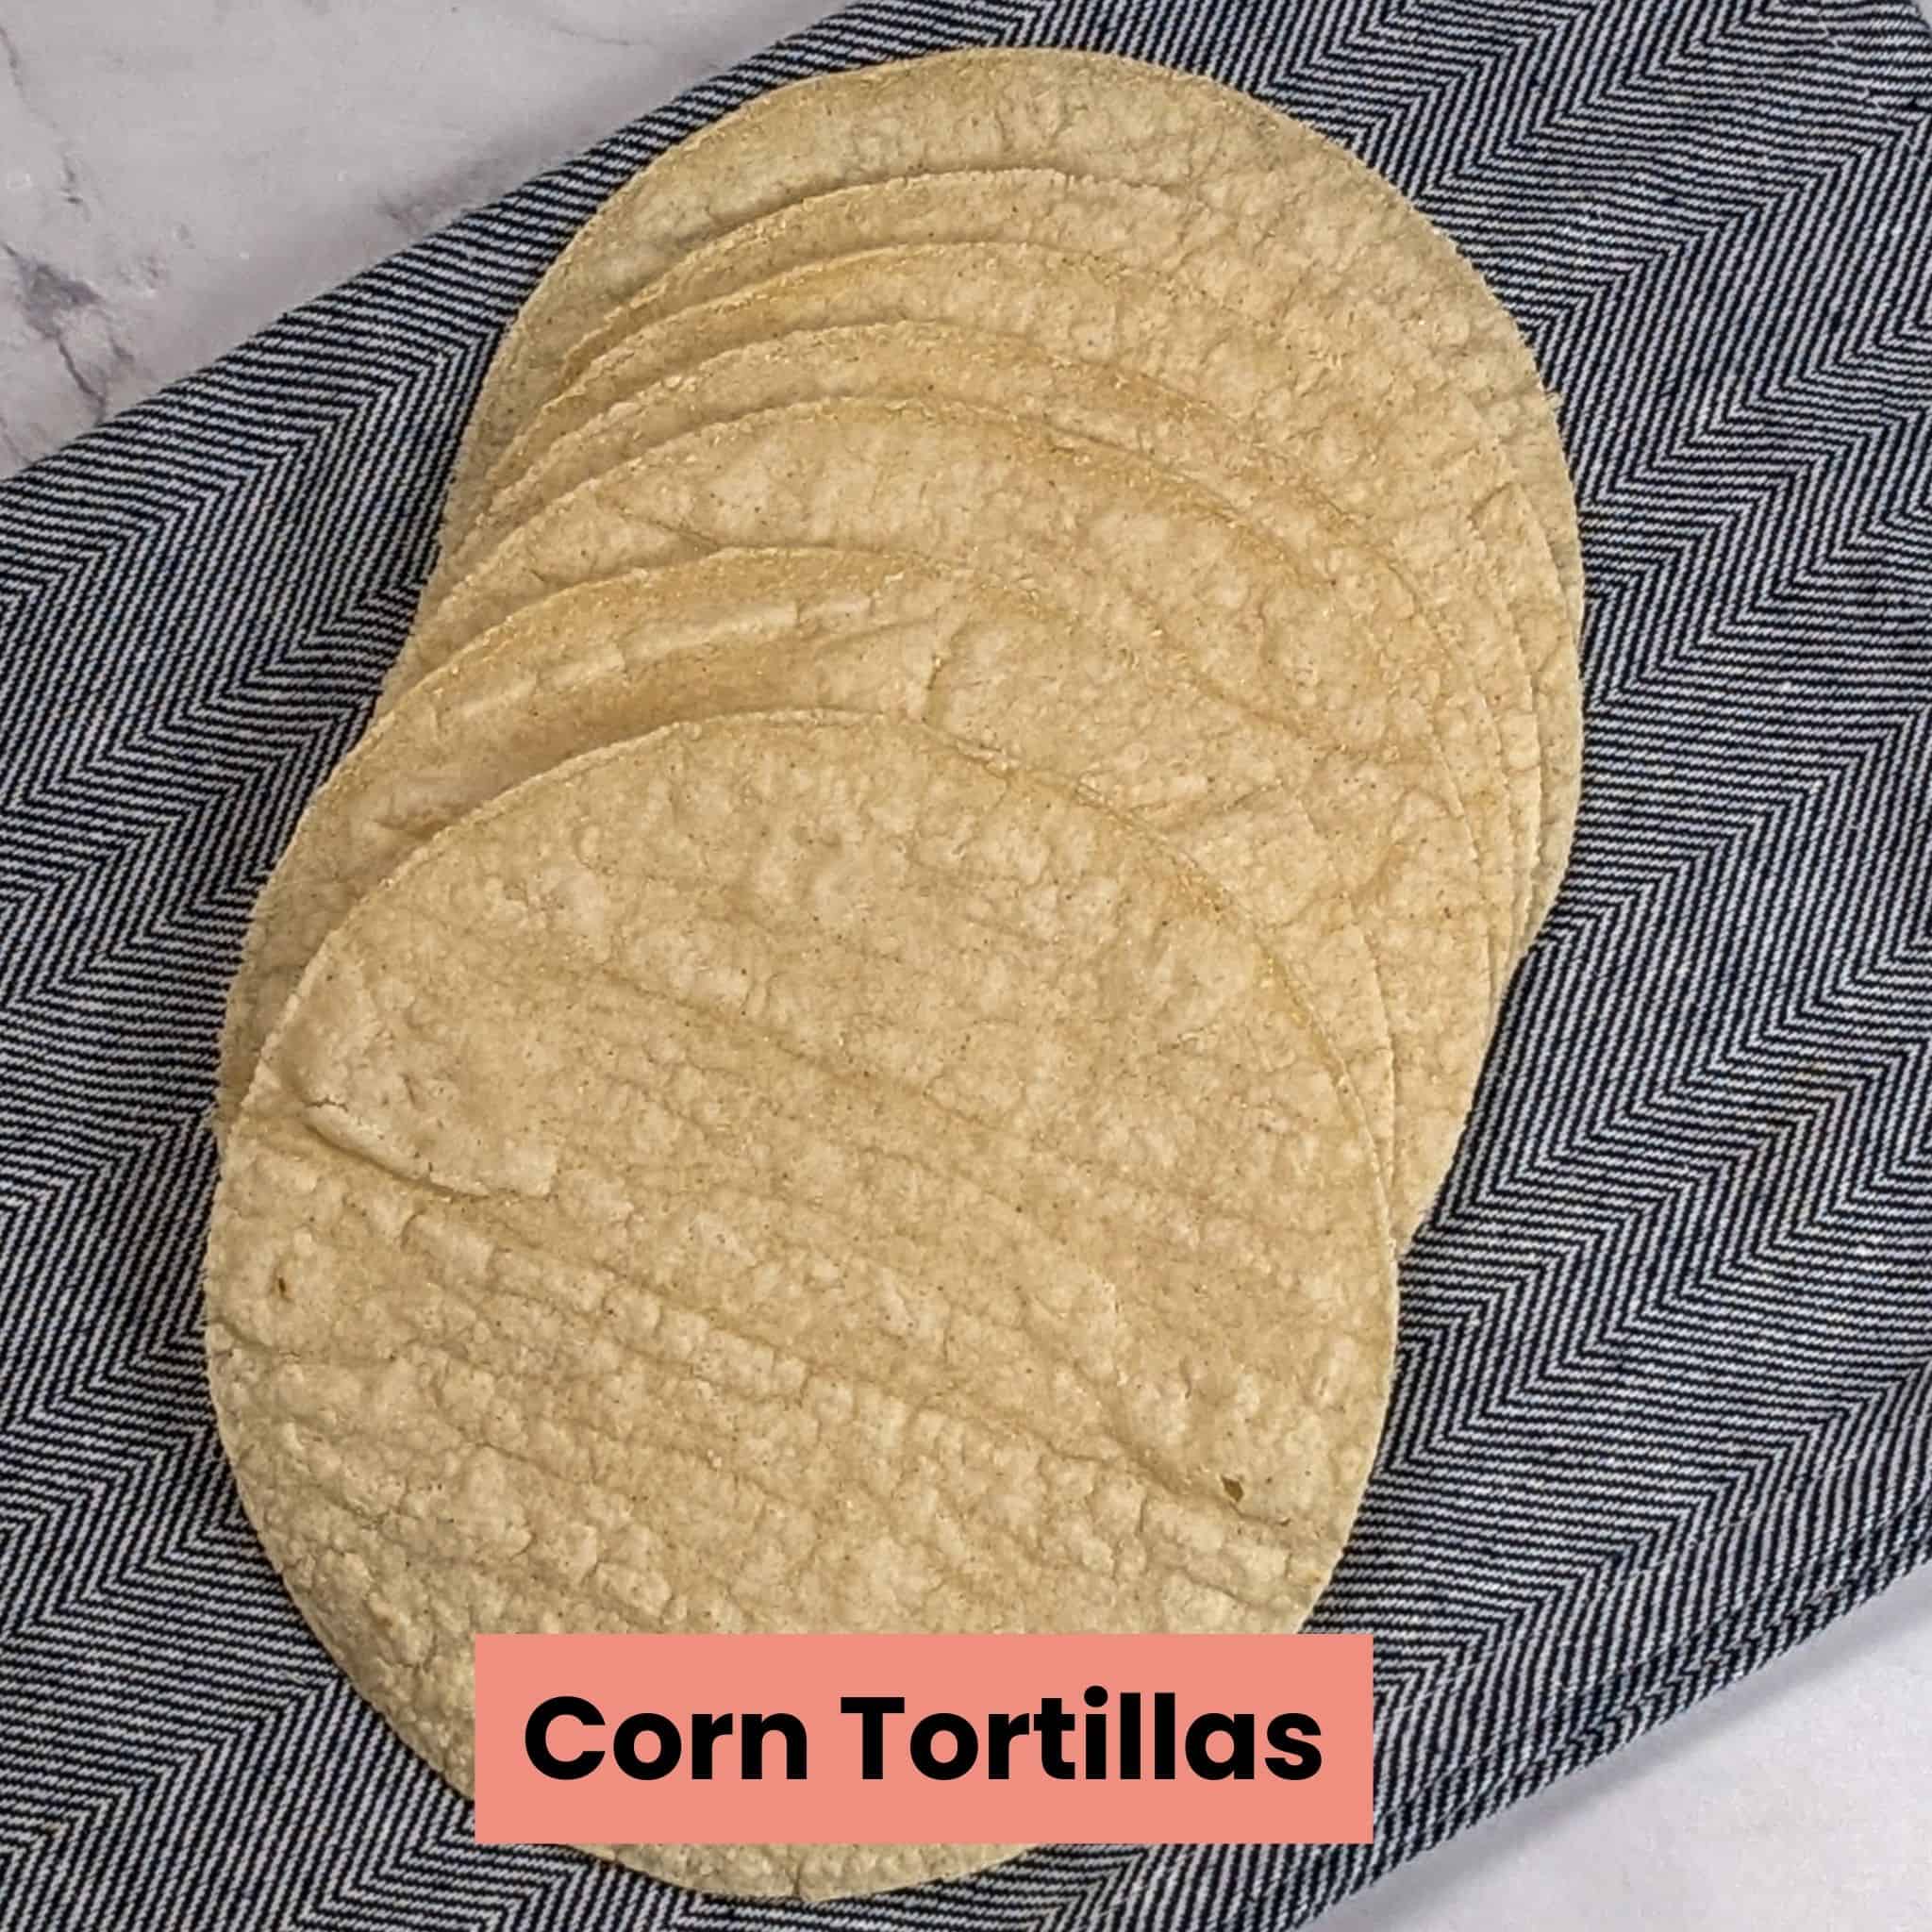 corn tortillas cascading on a kitchen towel.